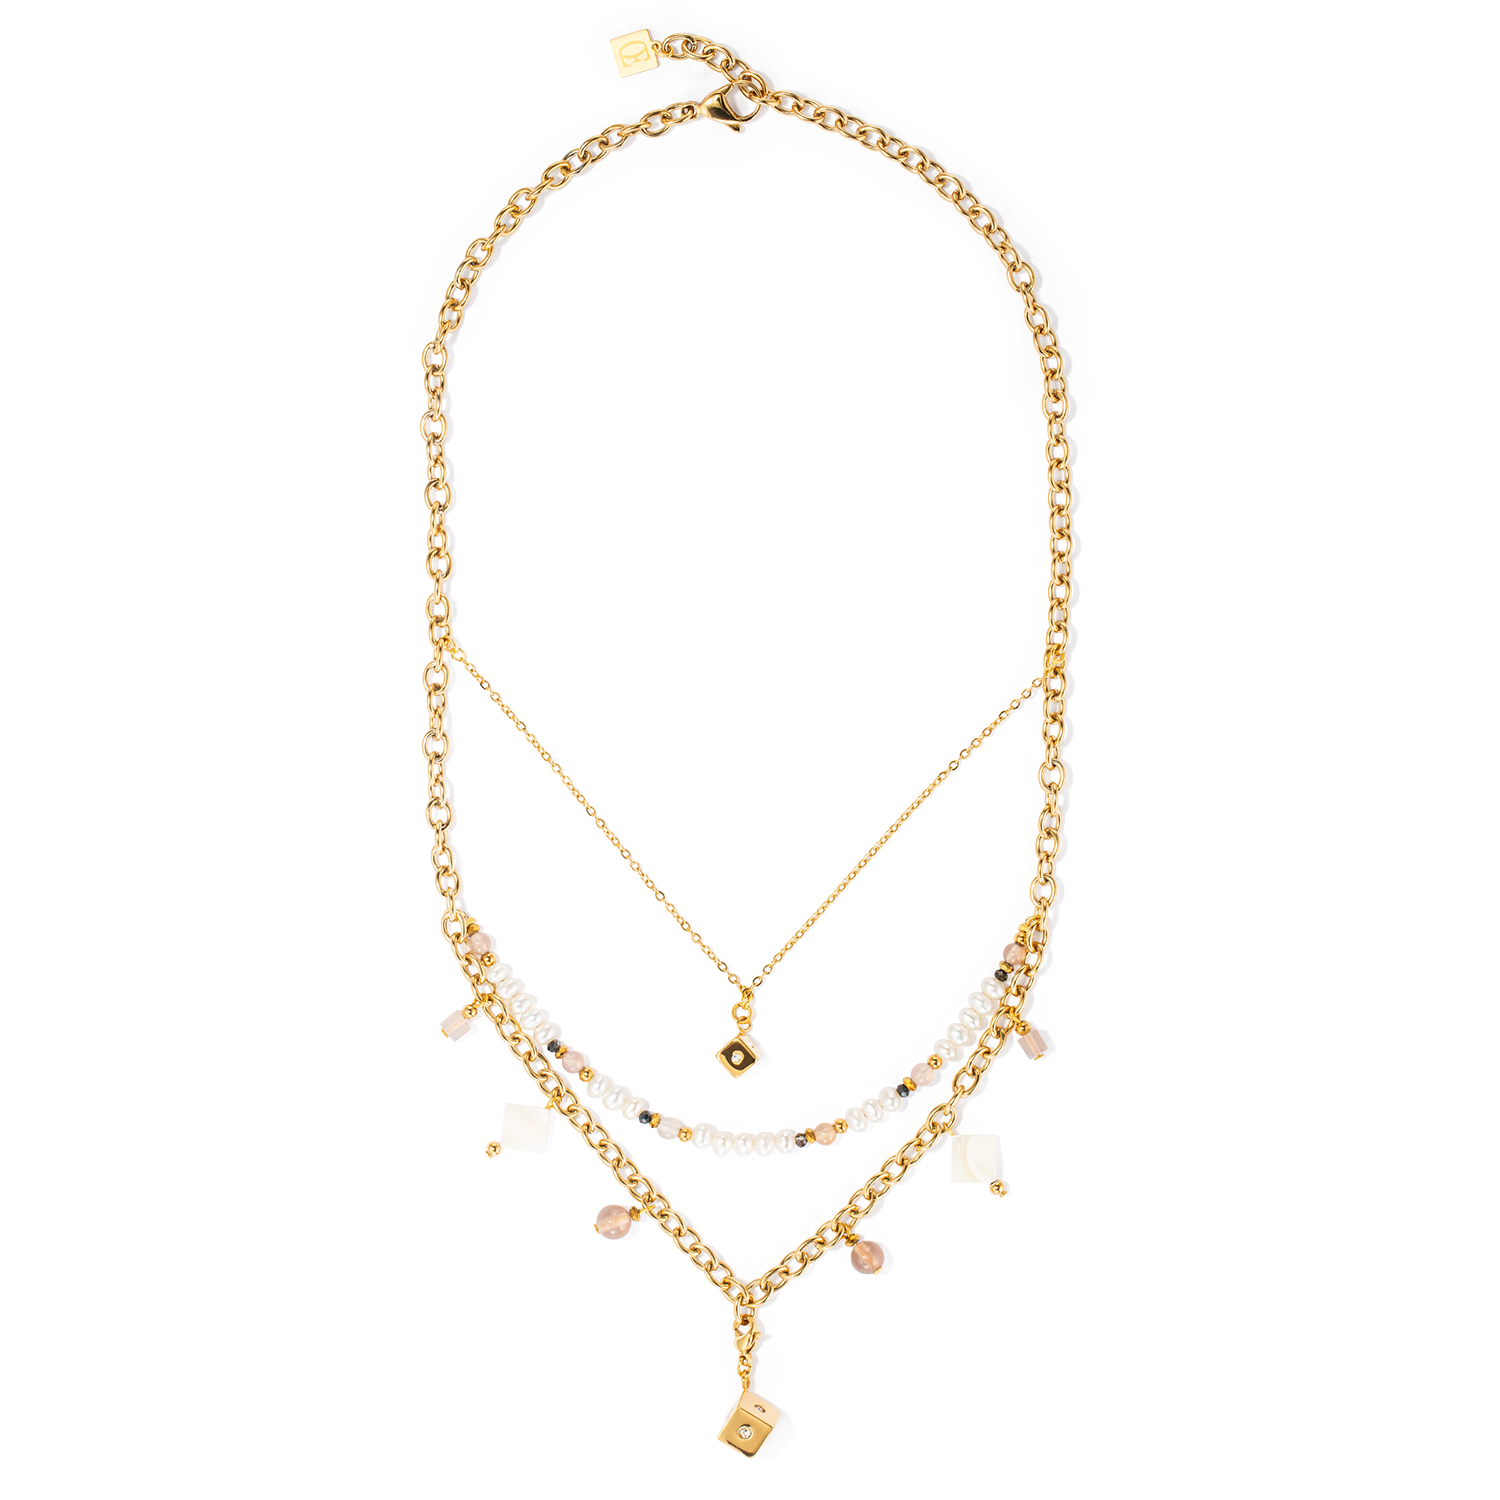 Boho necklace freshwater pearls gold & white